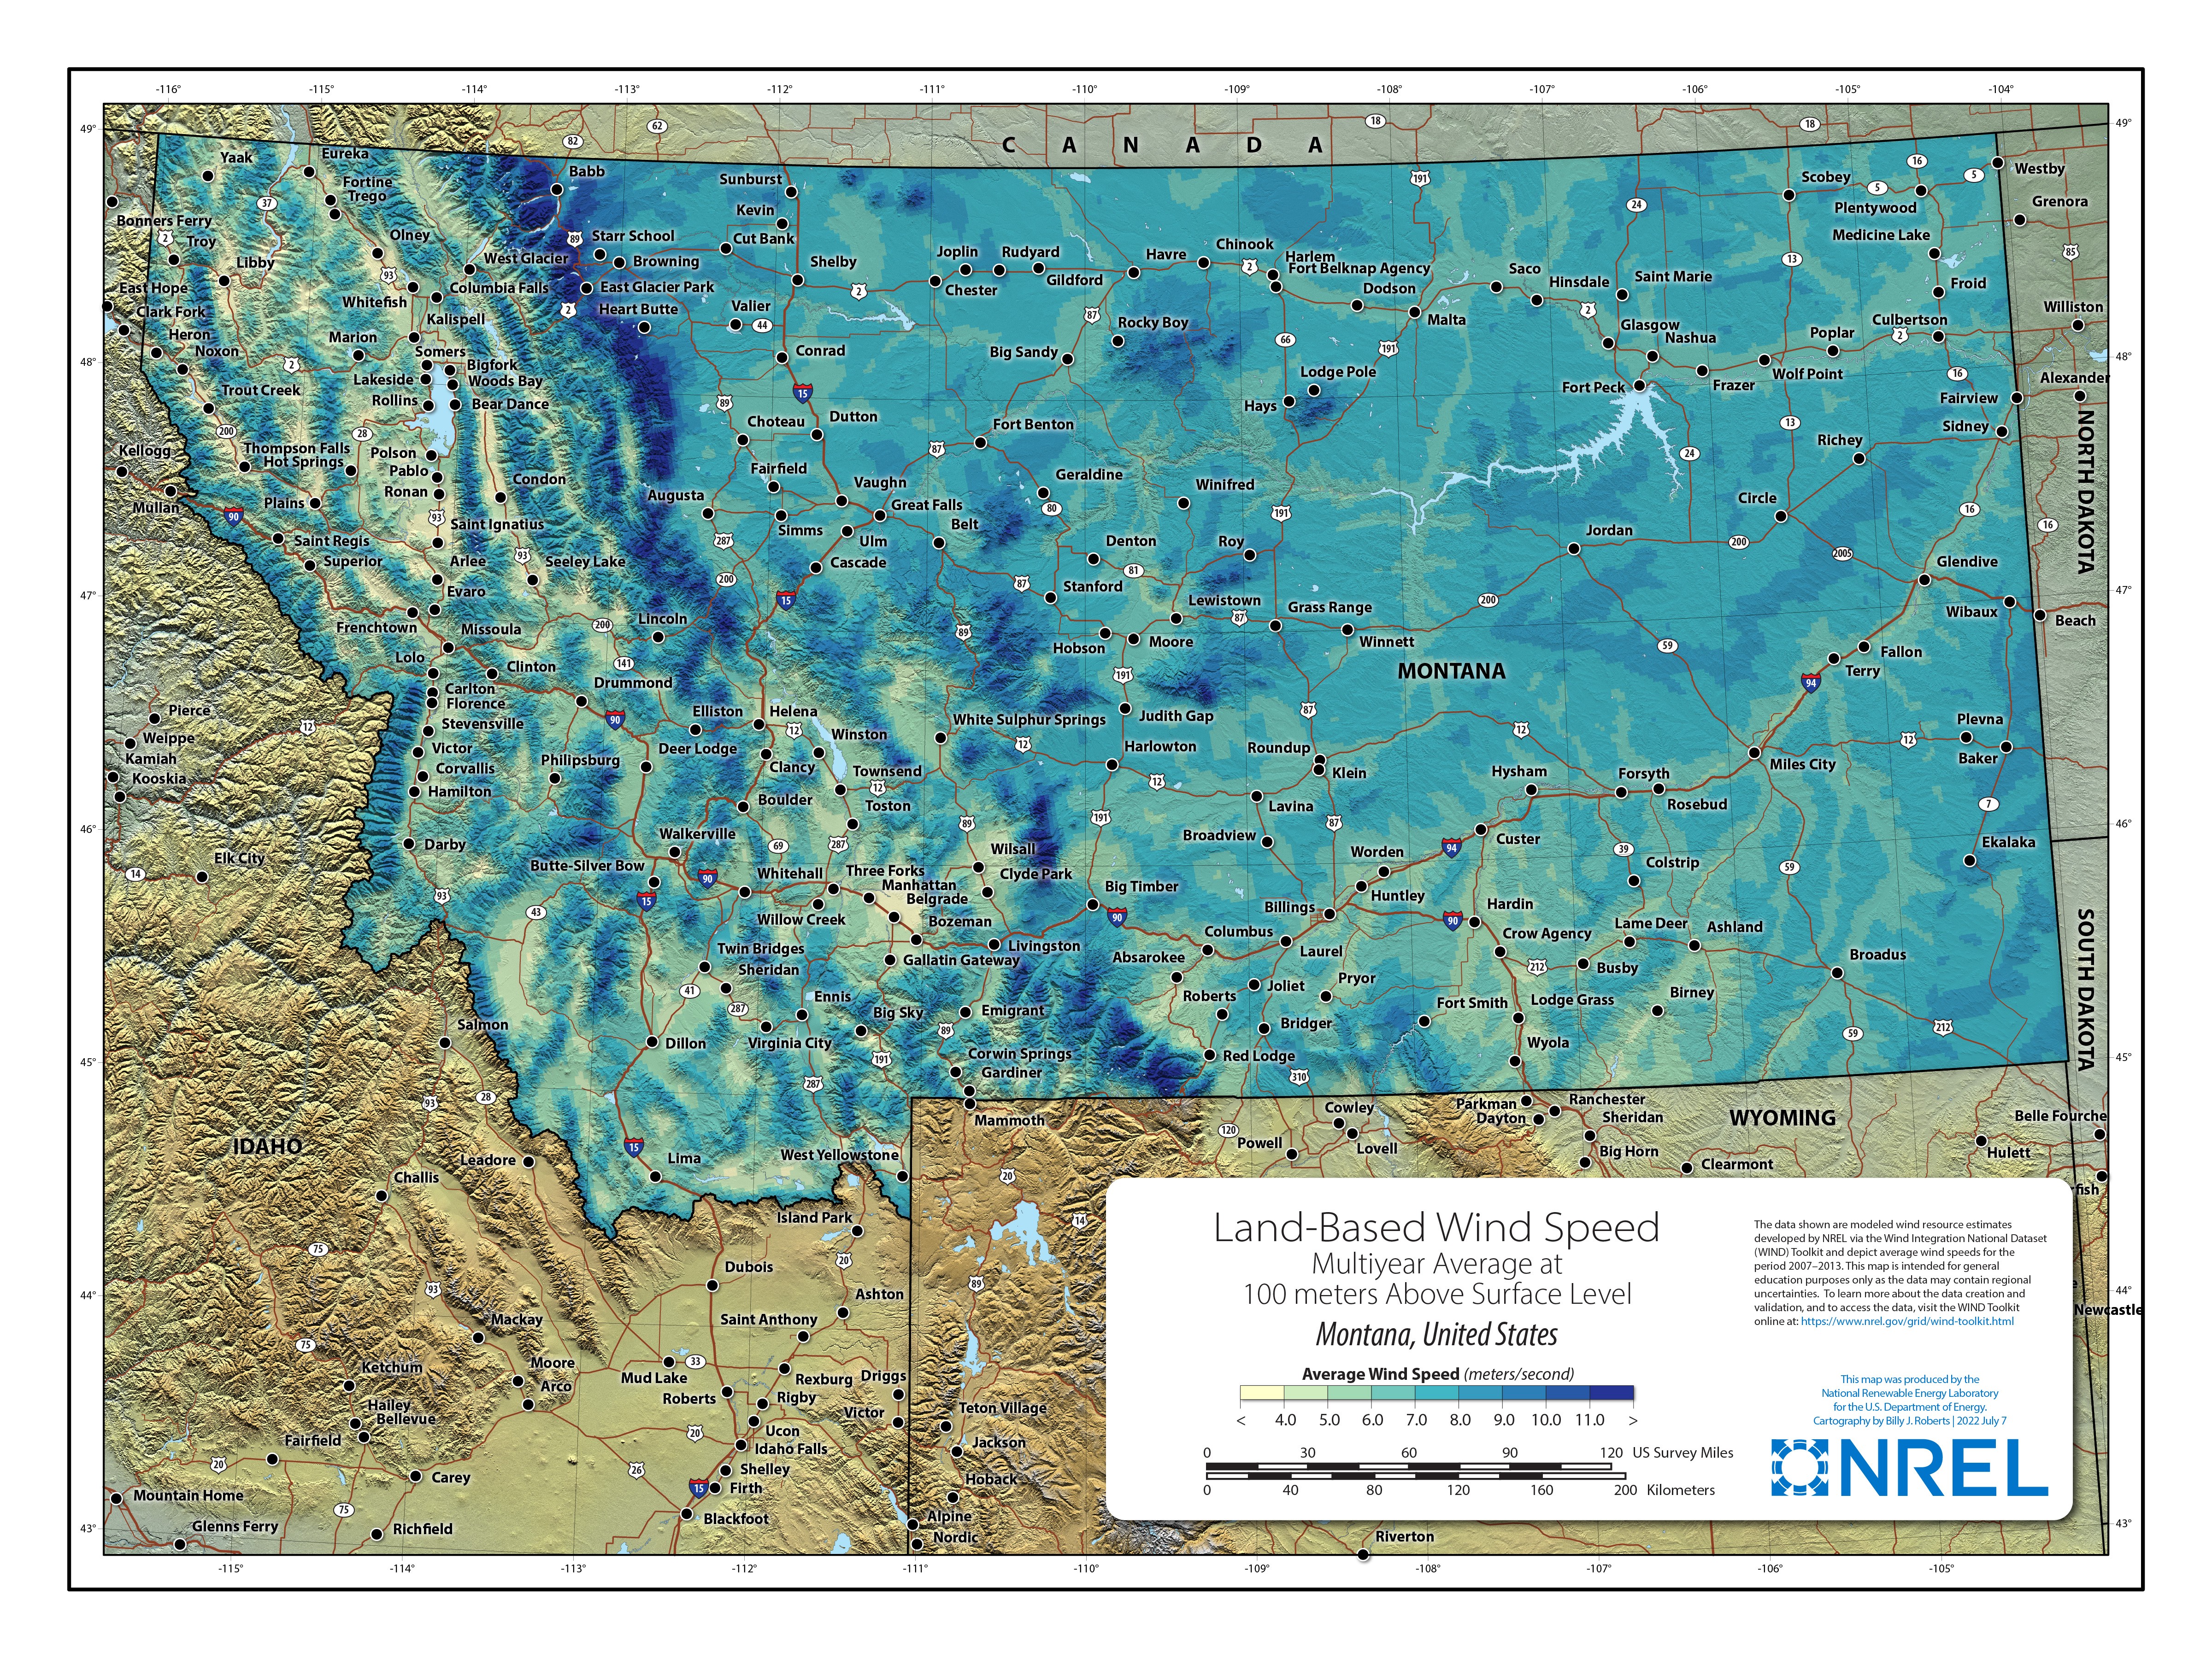 Montana Land-Based Wind Speed at 100 Meters